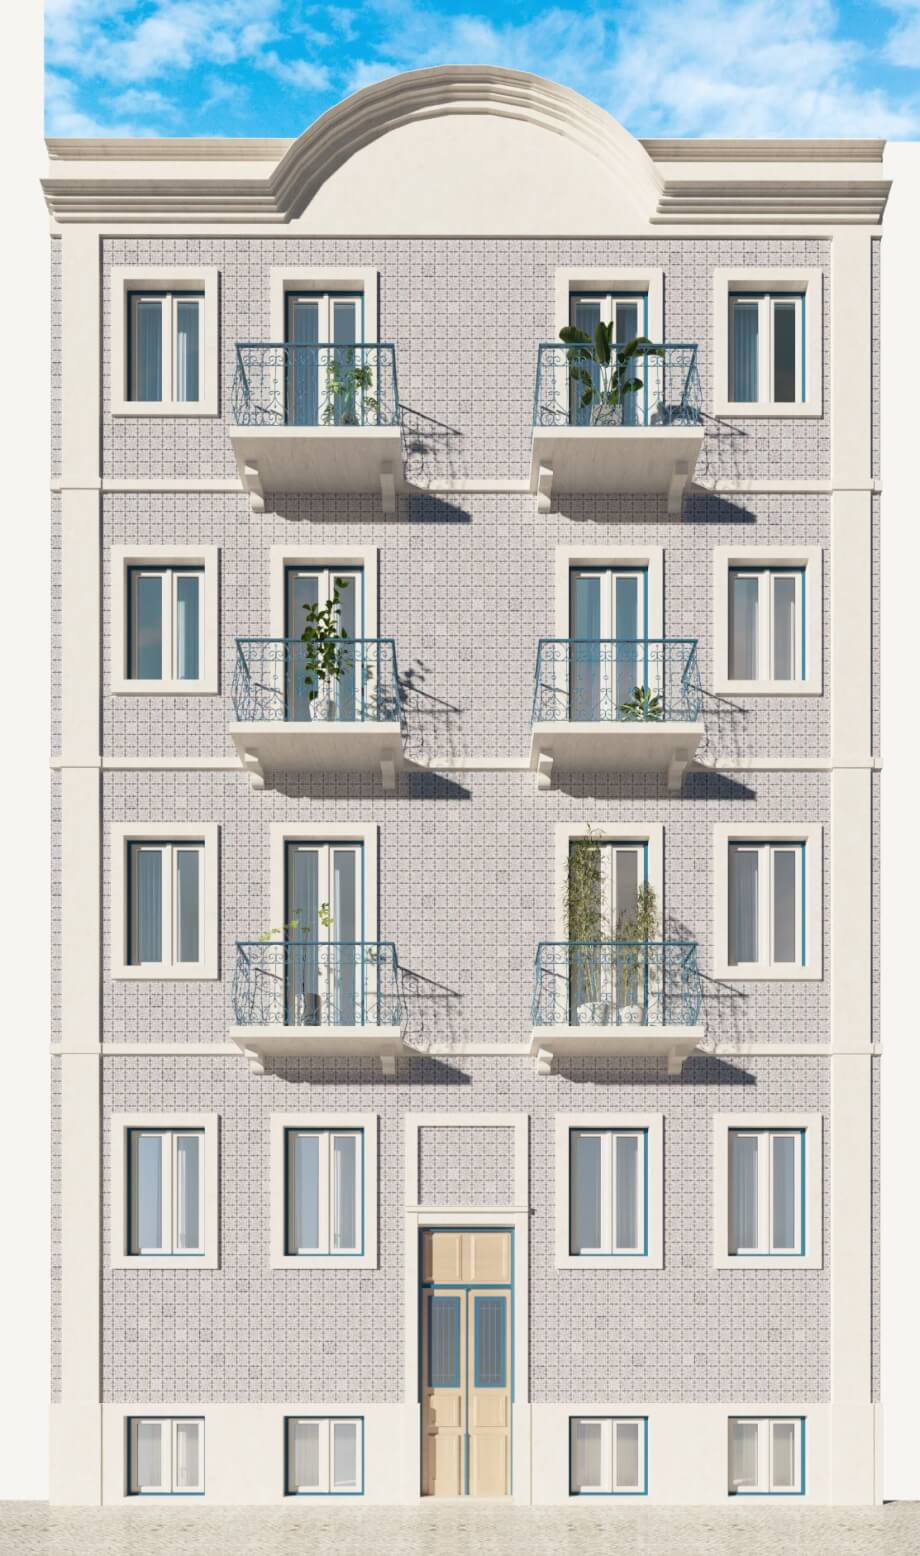 Property for Residential in Arroios, Arroios, Lisbon, Portugal